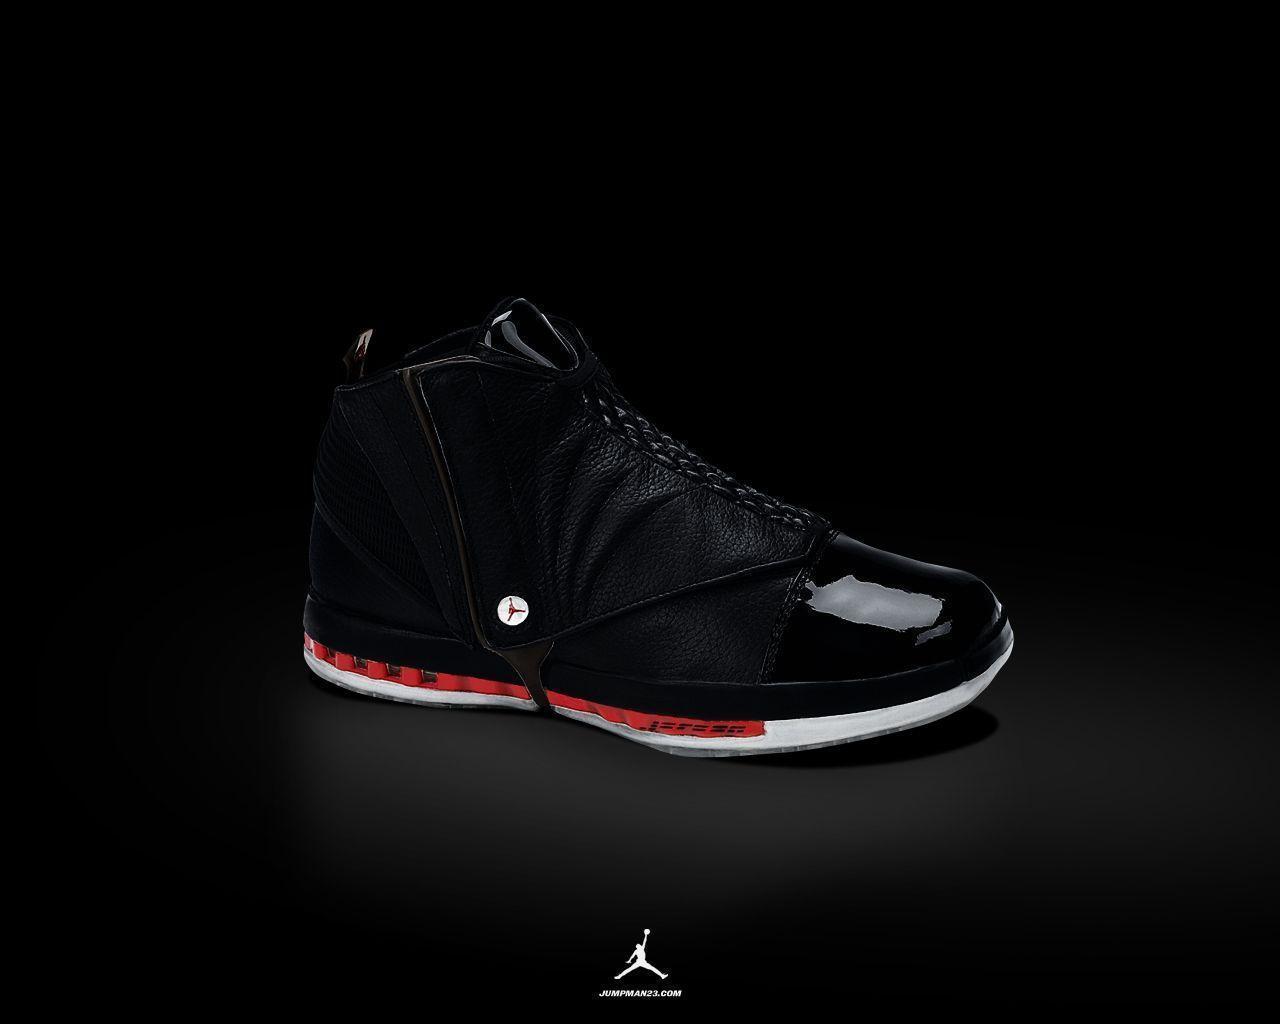 Jordan 2012 Lite Black Basketball Shoes Wallpapers Streetball